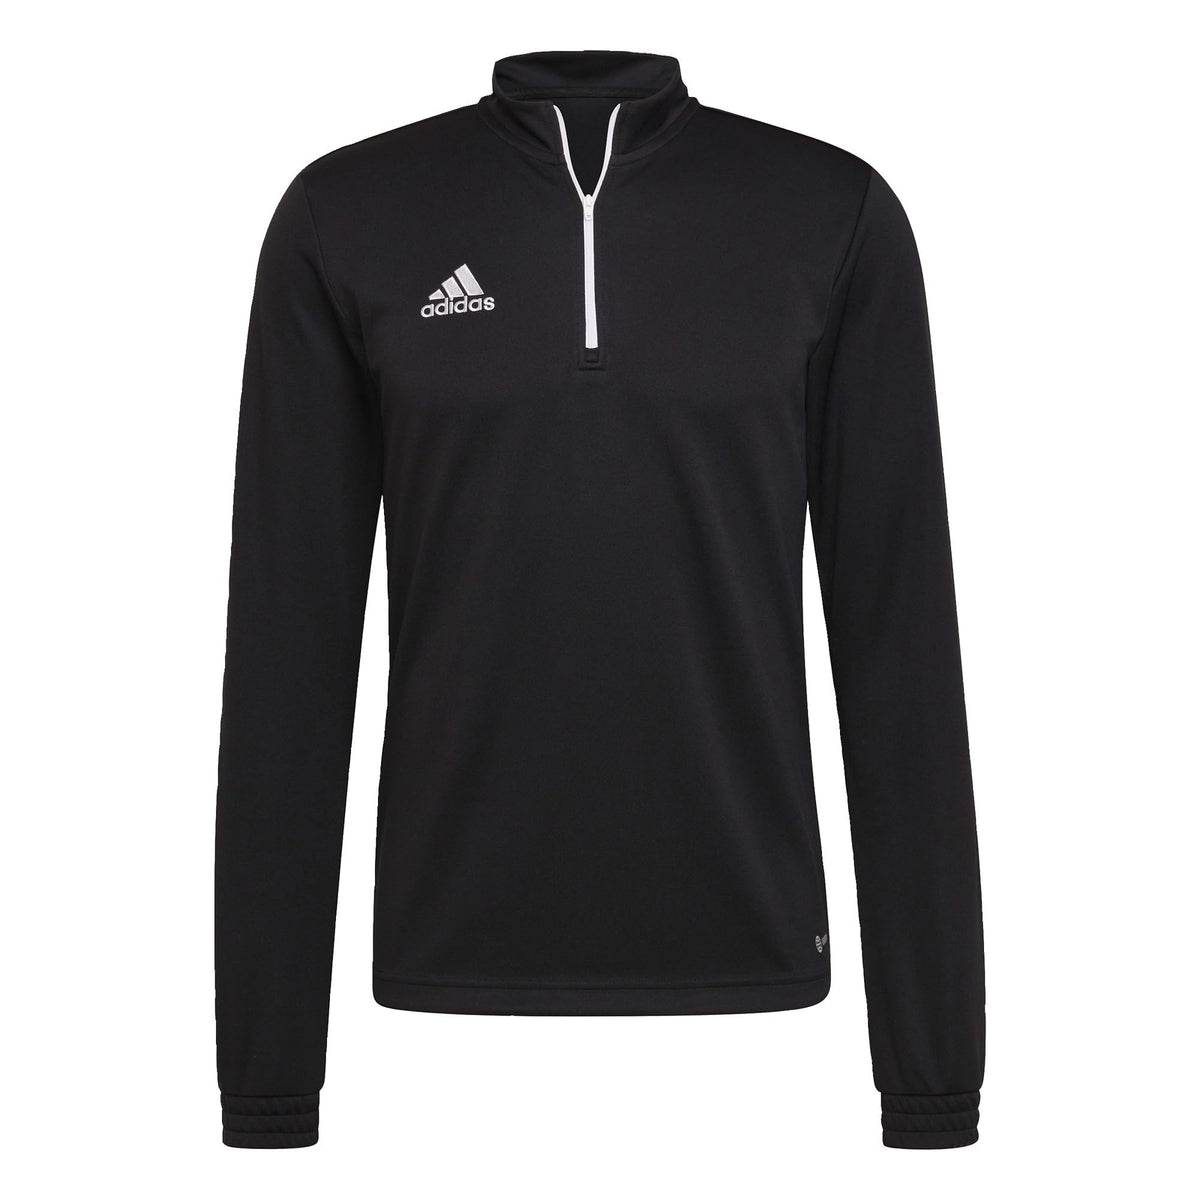 adidas Men's Ent22 Tr Top Sweatshirt, Black, XL UK